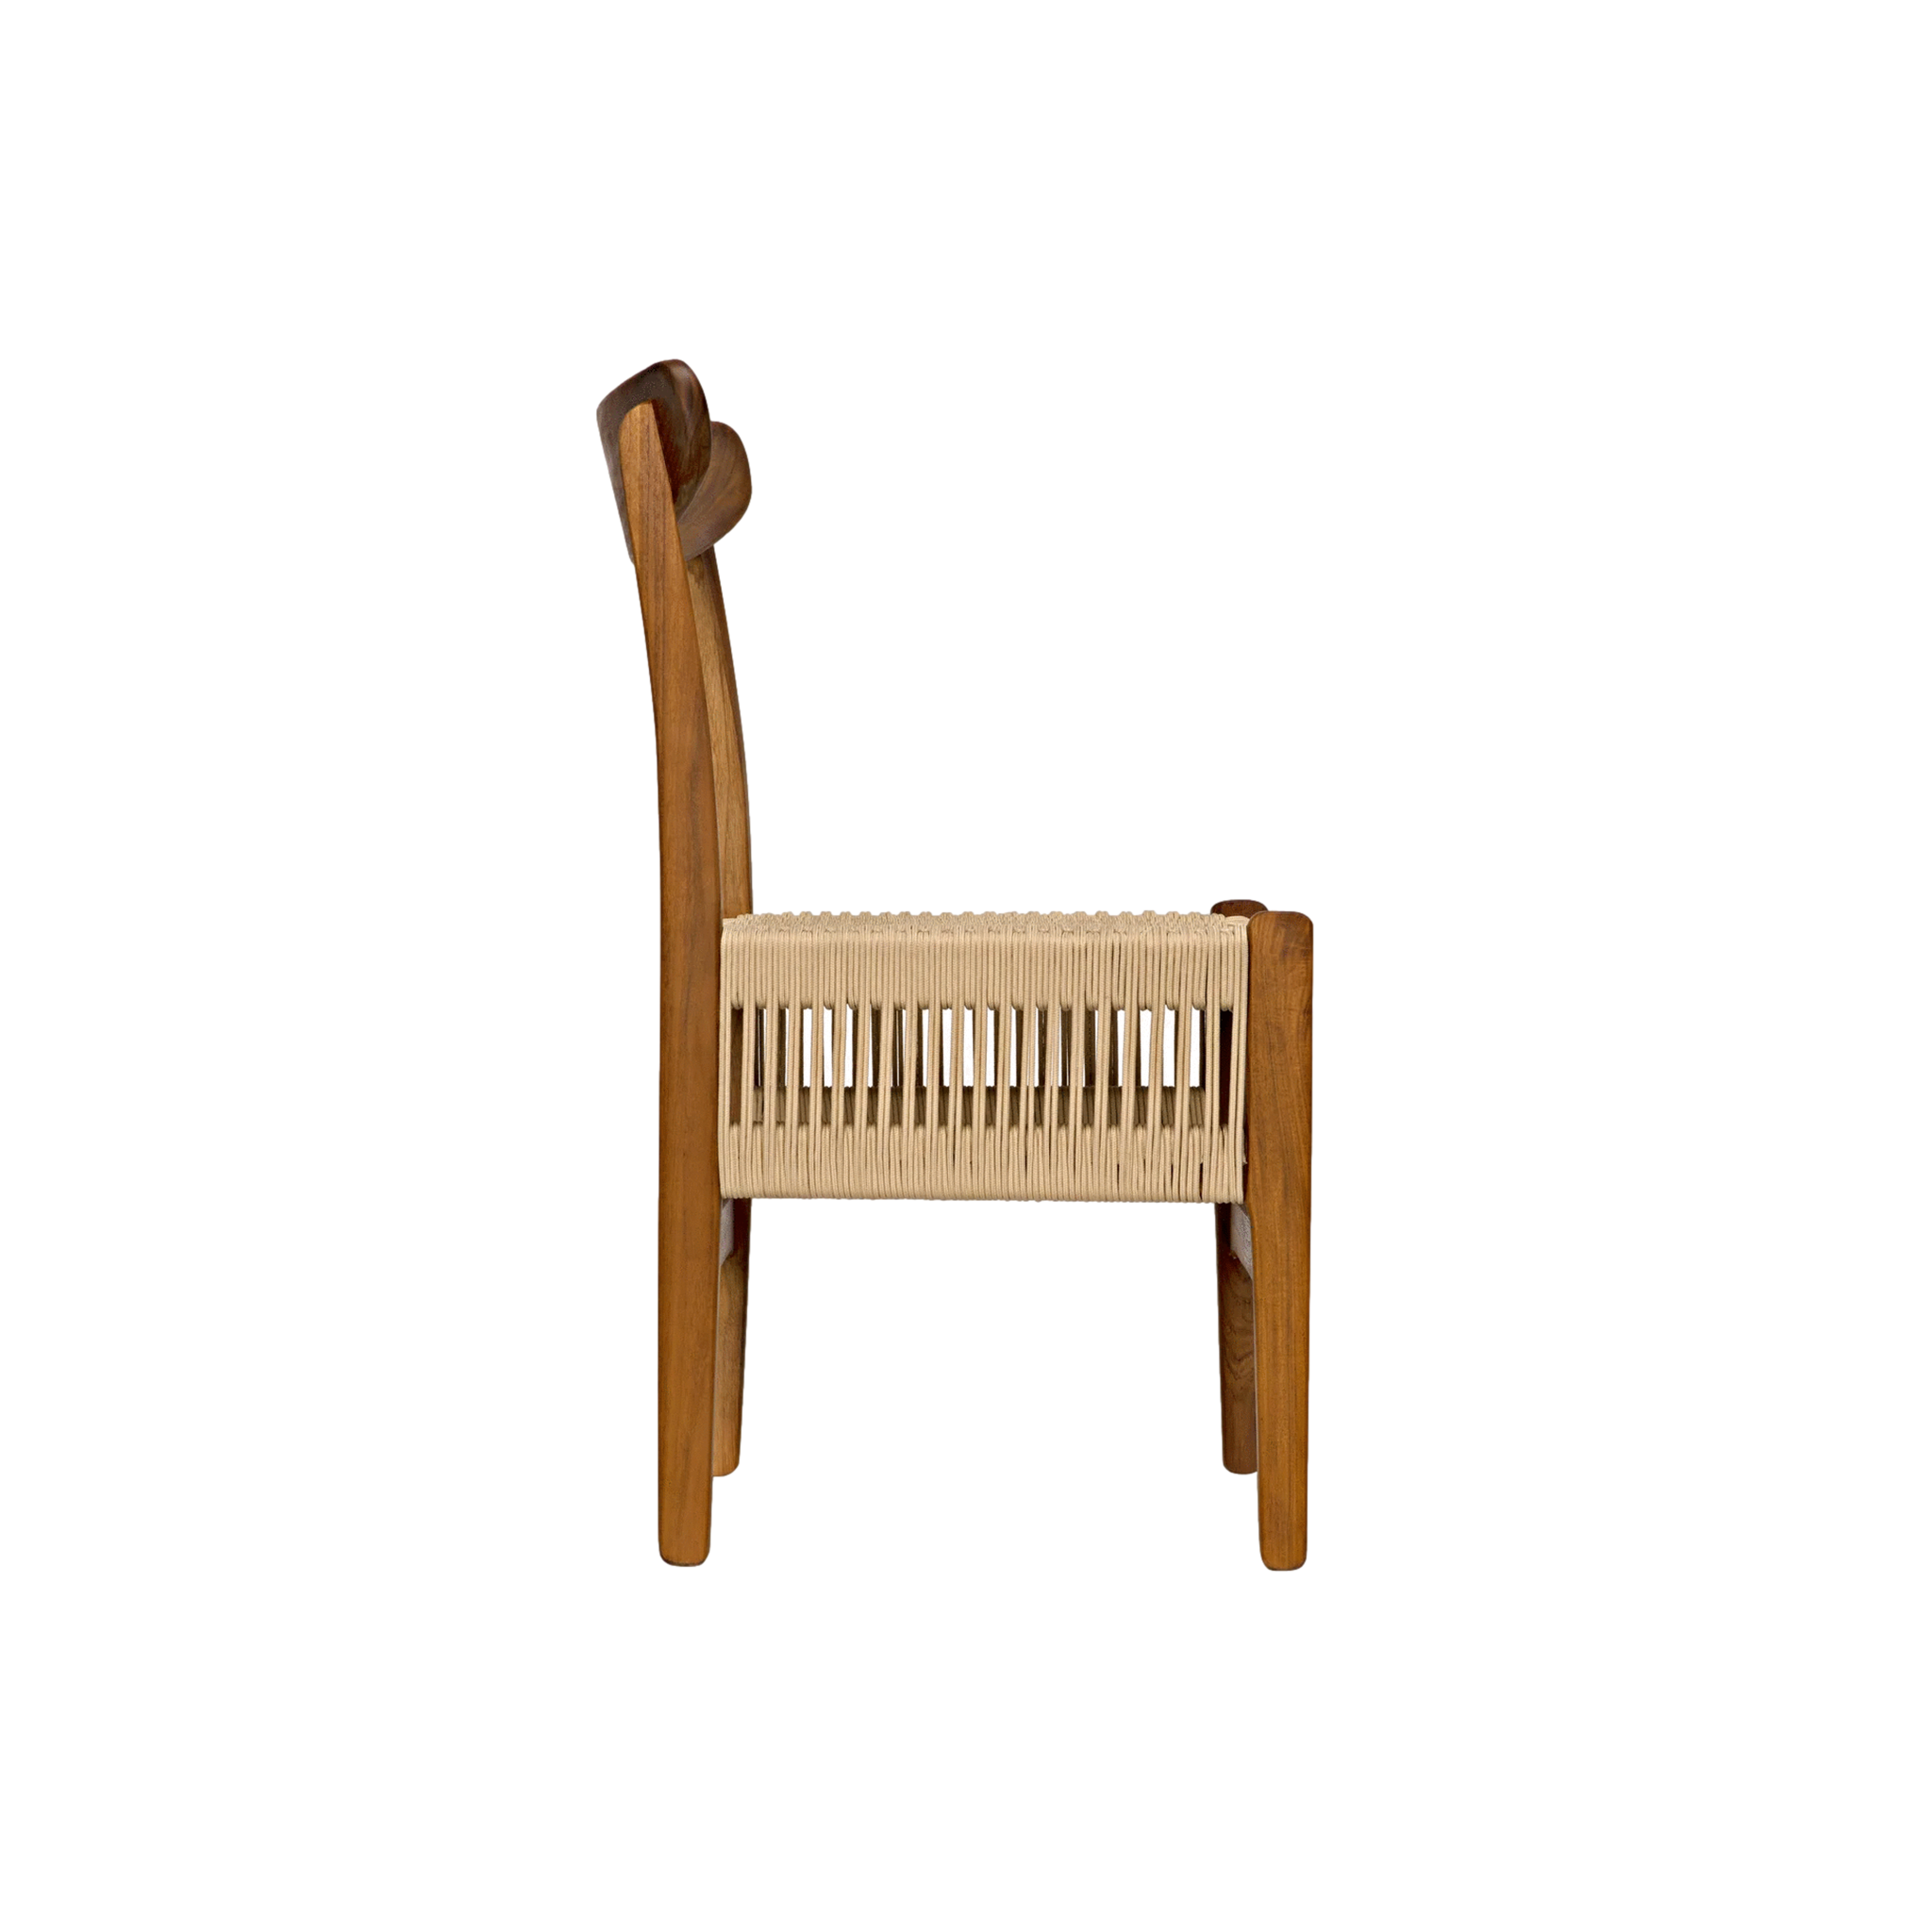 Shagira Chair